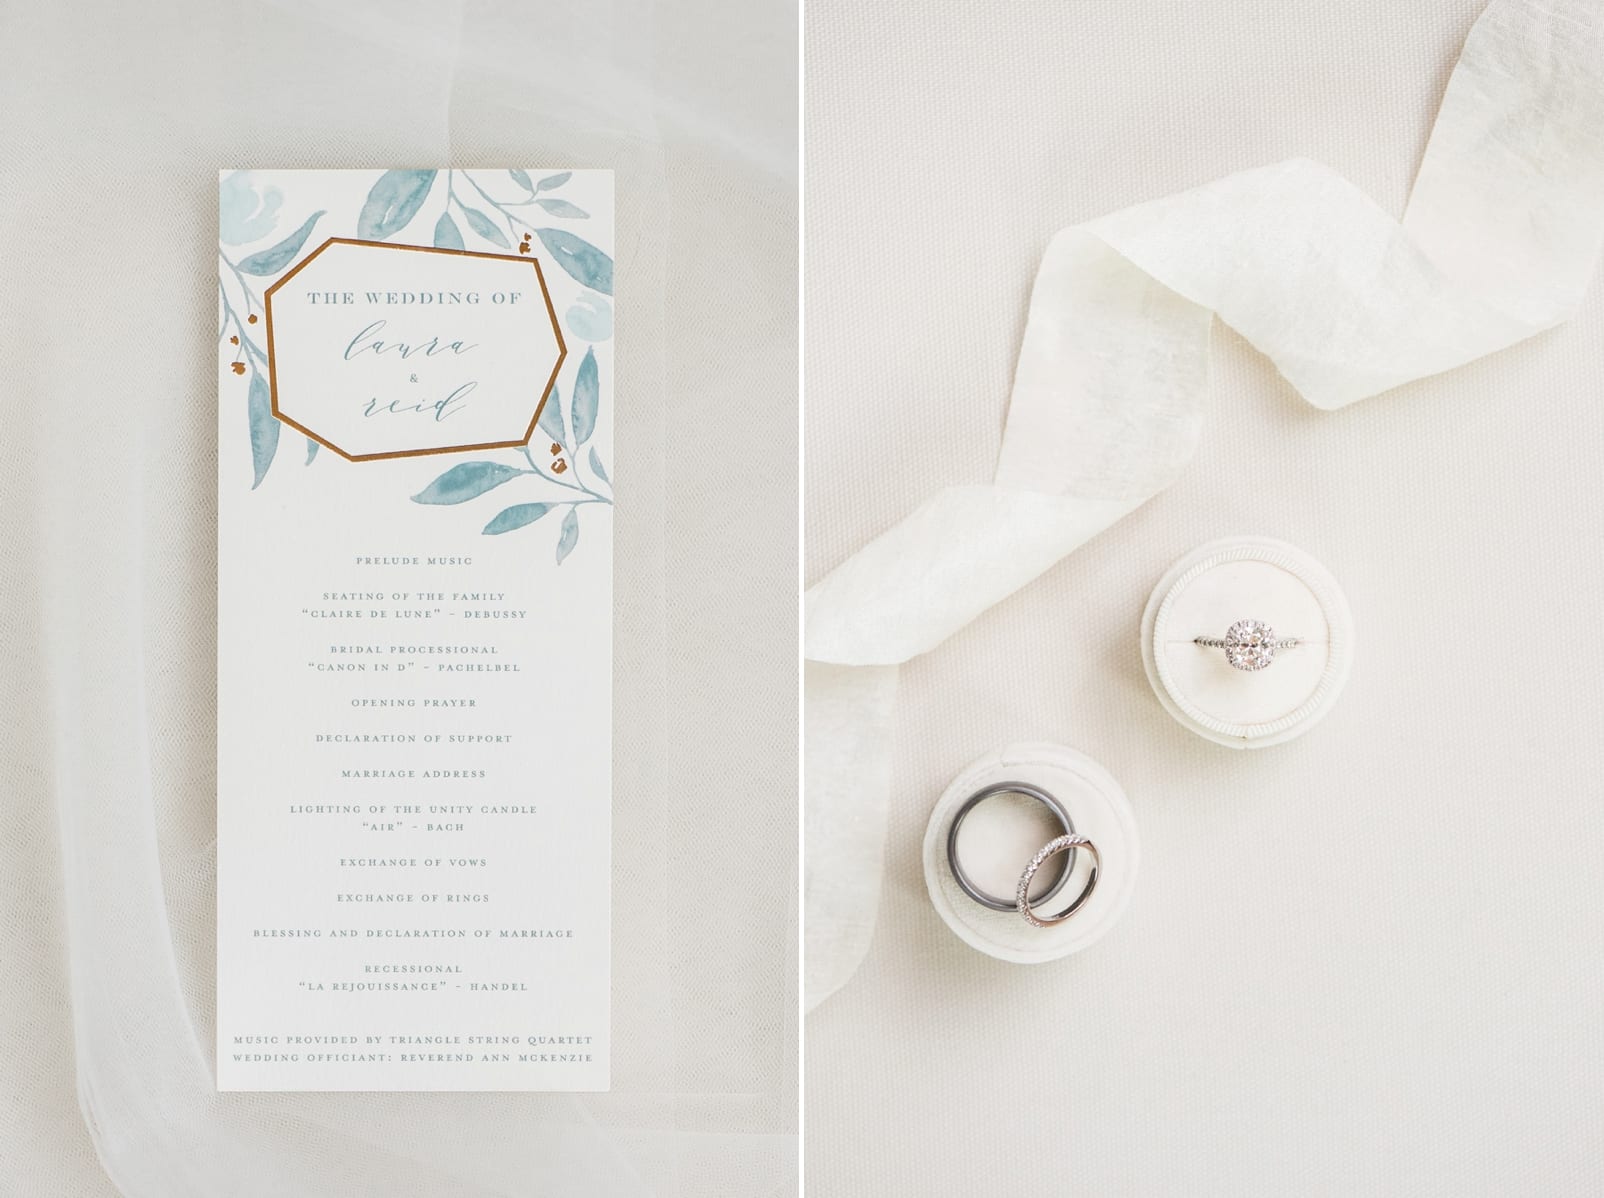 Melrose Knitting bridal details and menu card photo